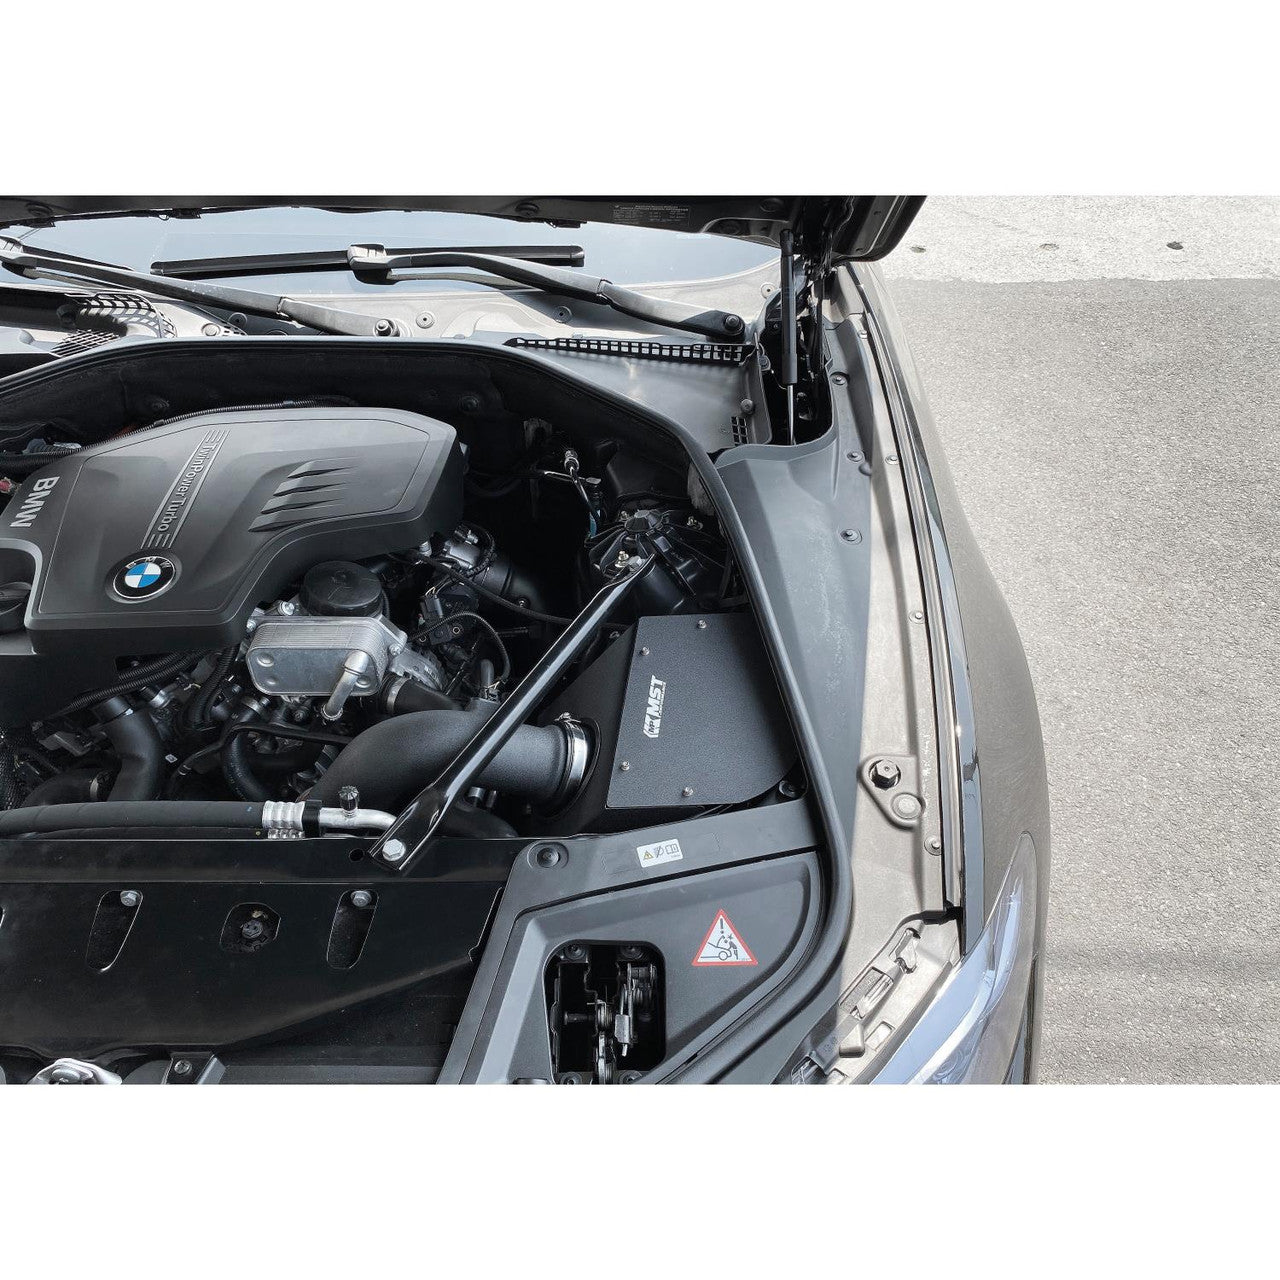 MST Performance Intake System - BMW F10 520i/528i 2.0 N20